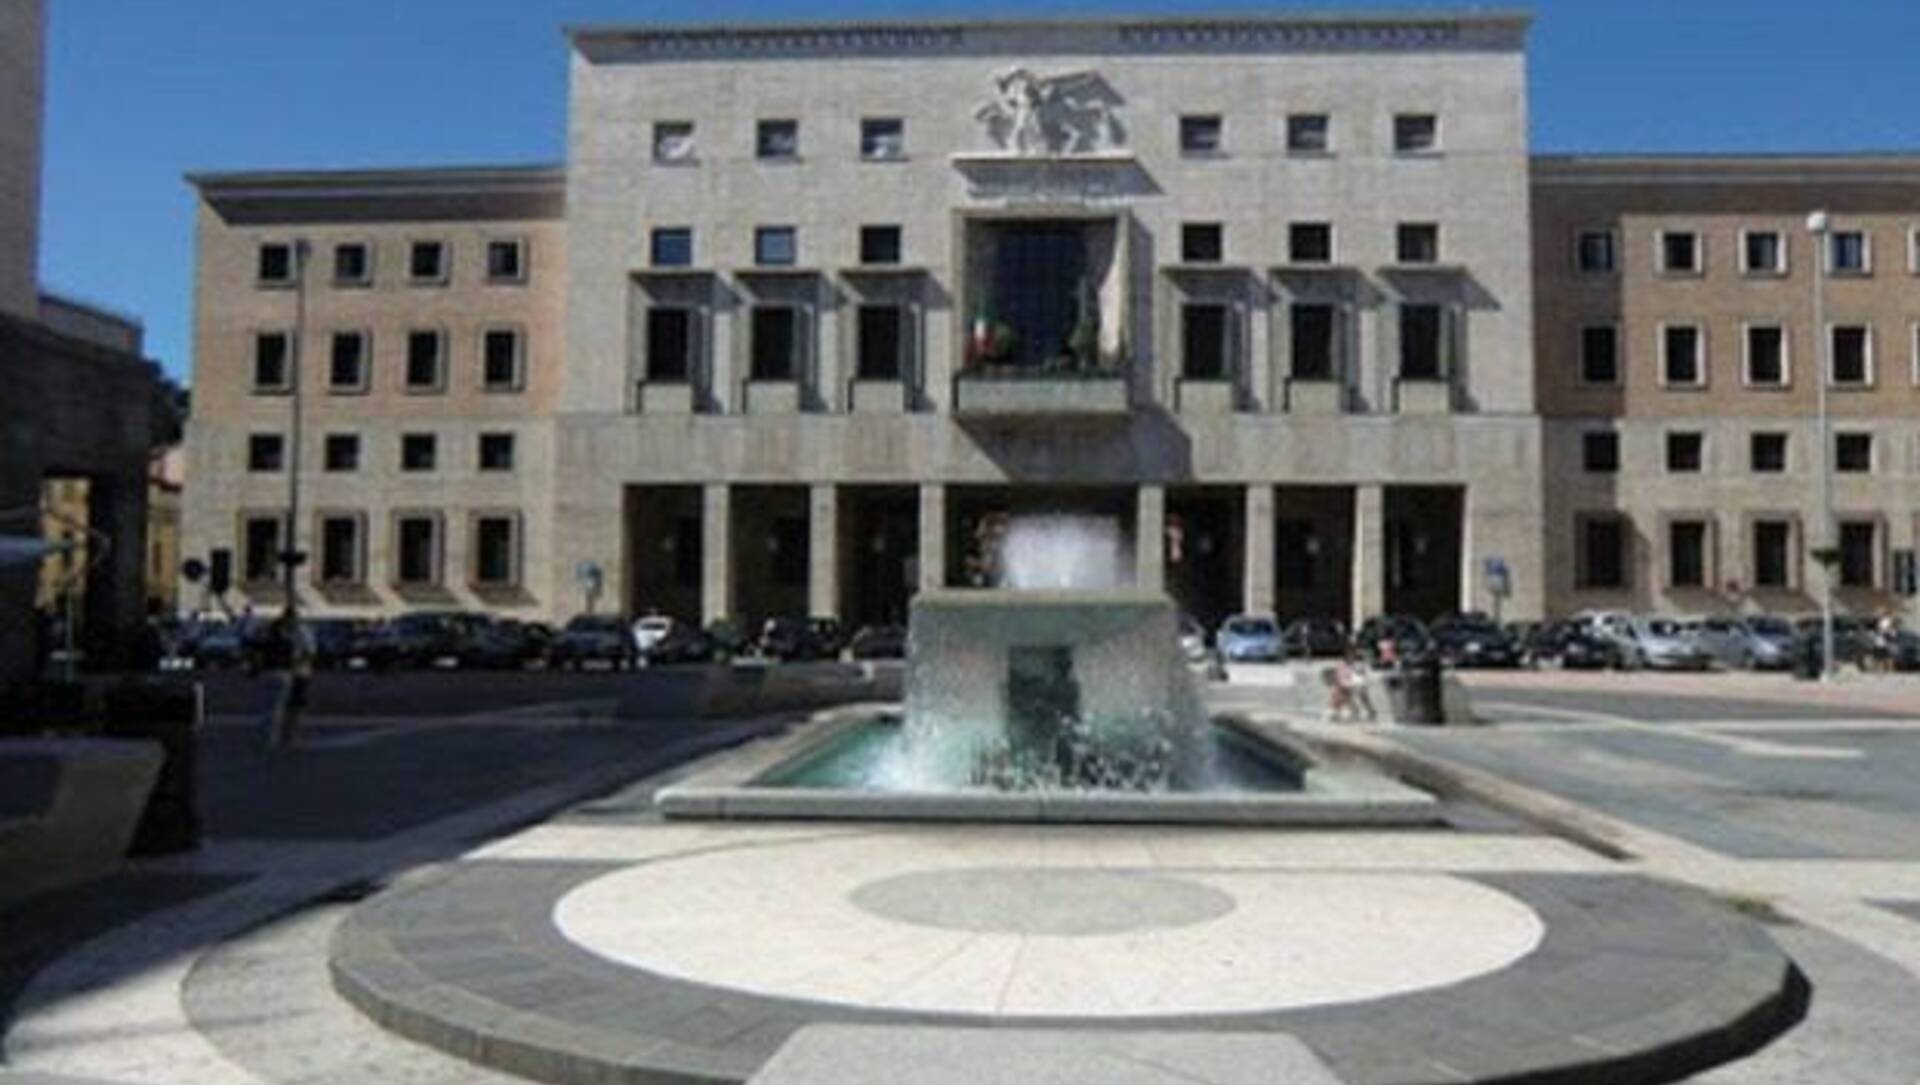 Varese, Camera di commercio: “Estate di cautela nelle spese”